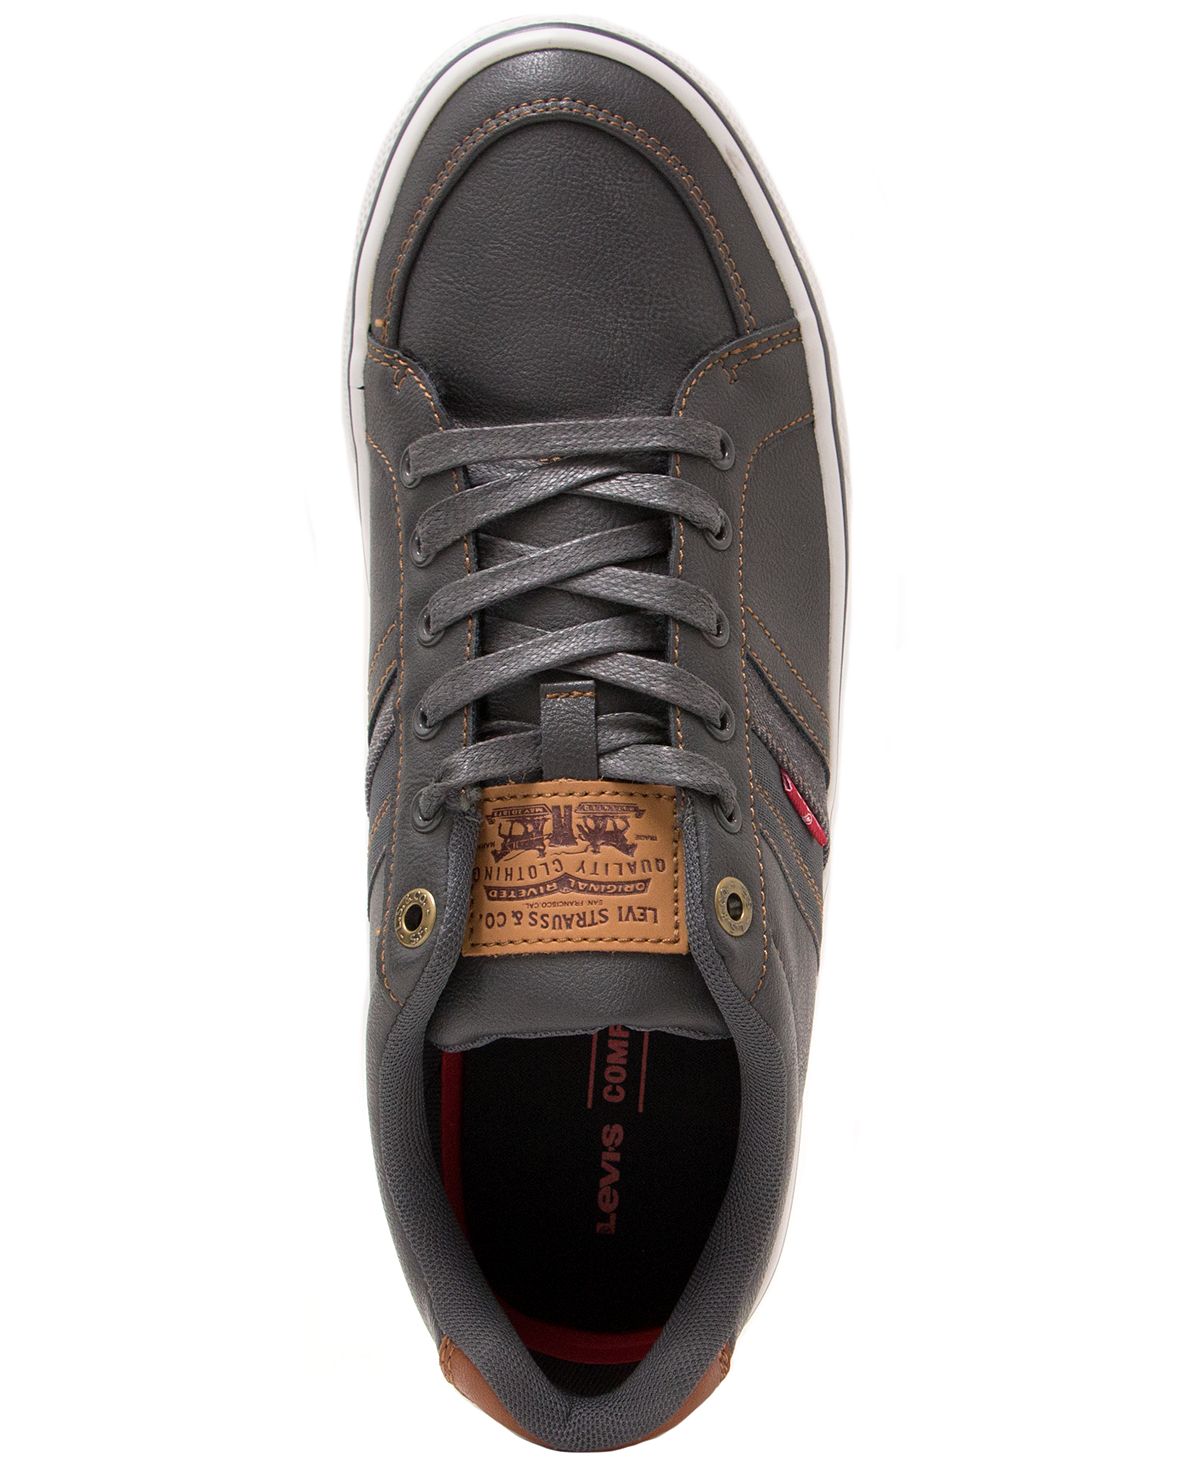 Levi's Turner Nappa Sneakers Charcoal/ Tan